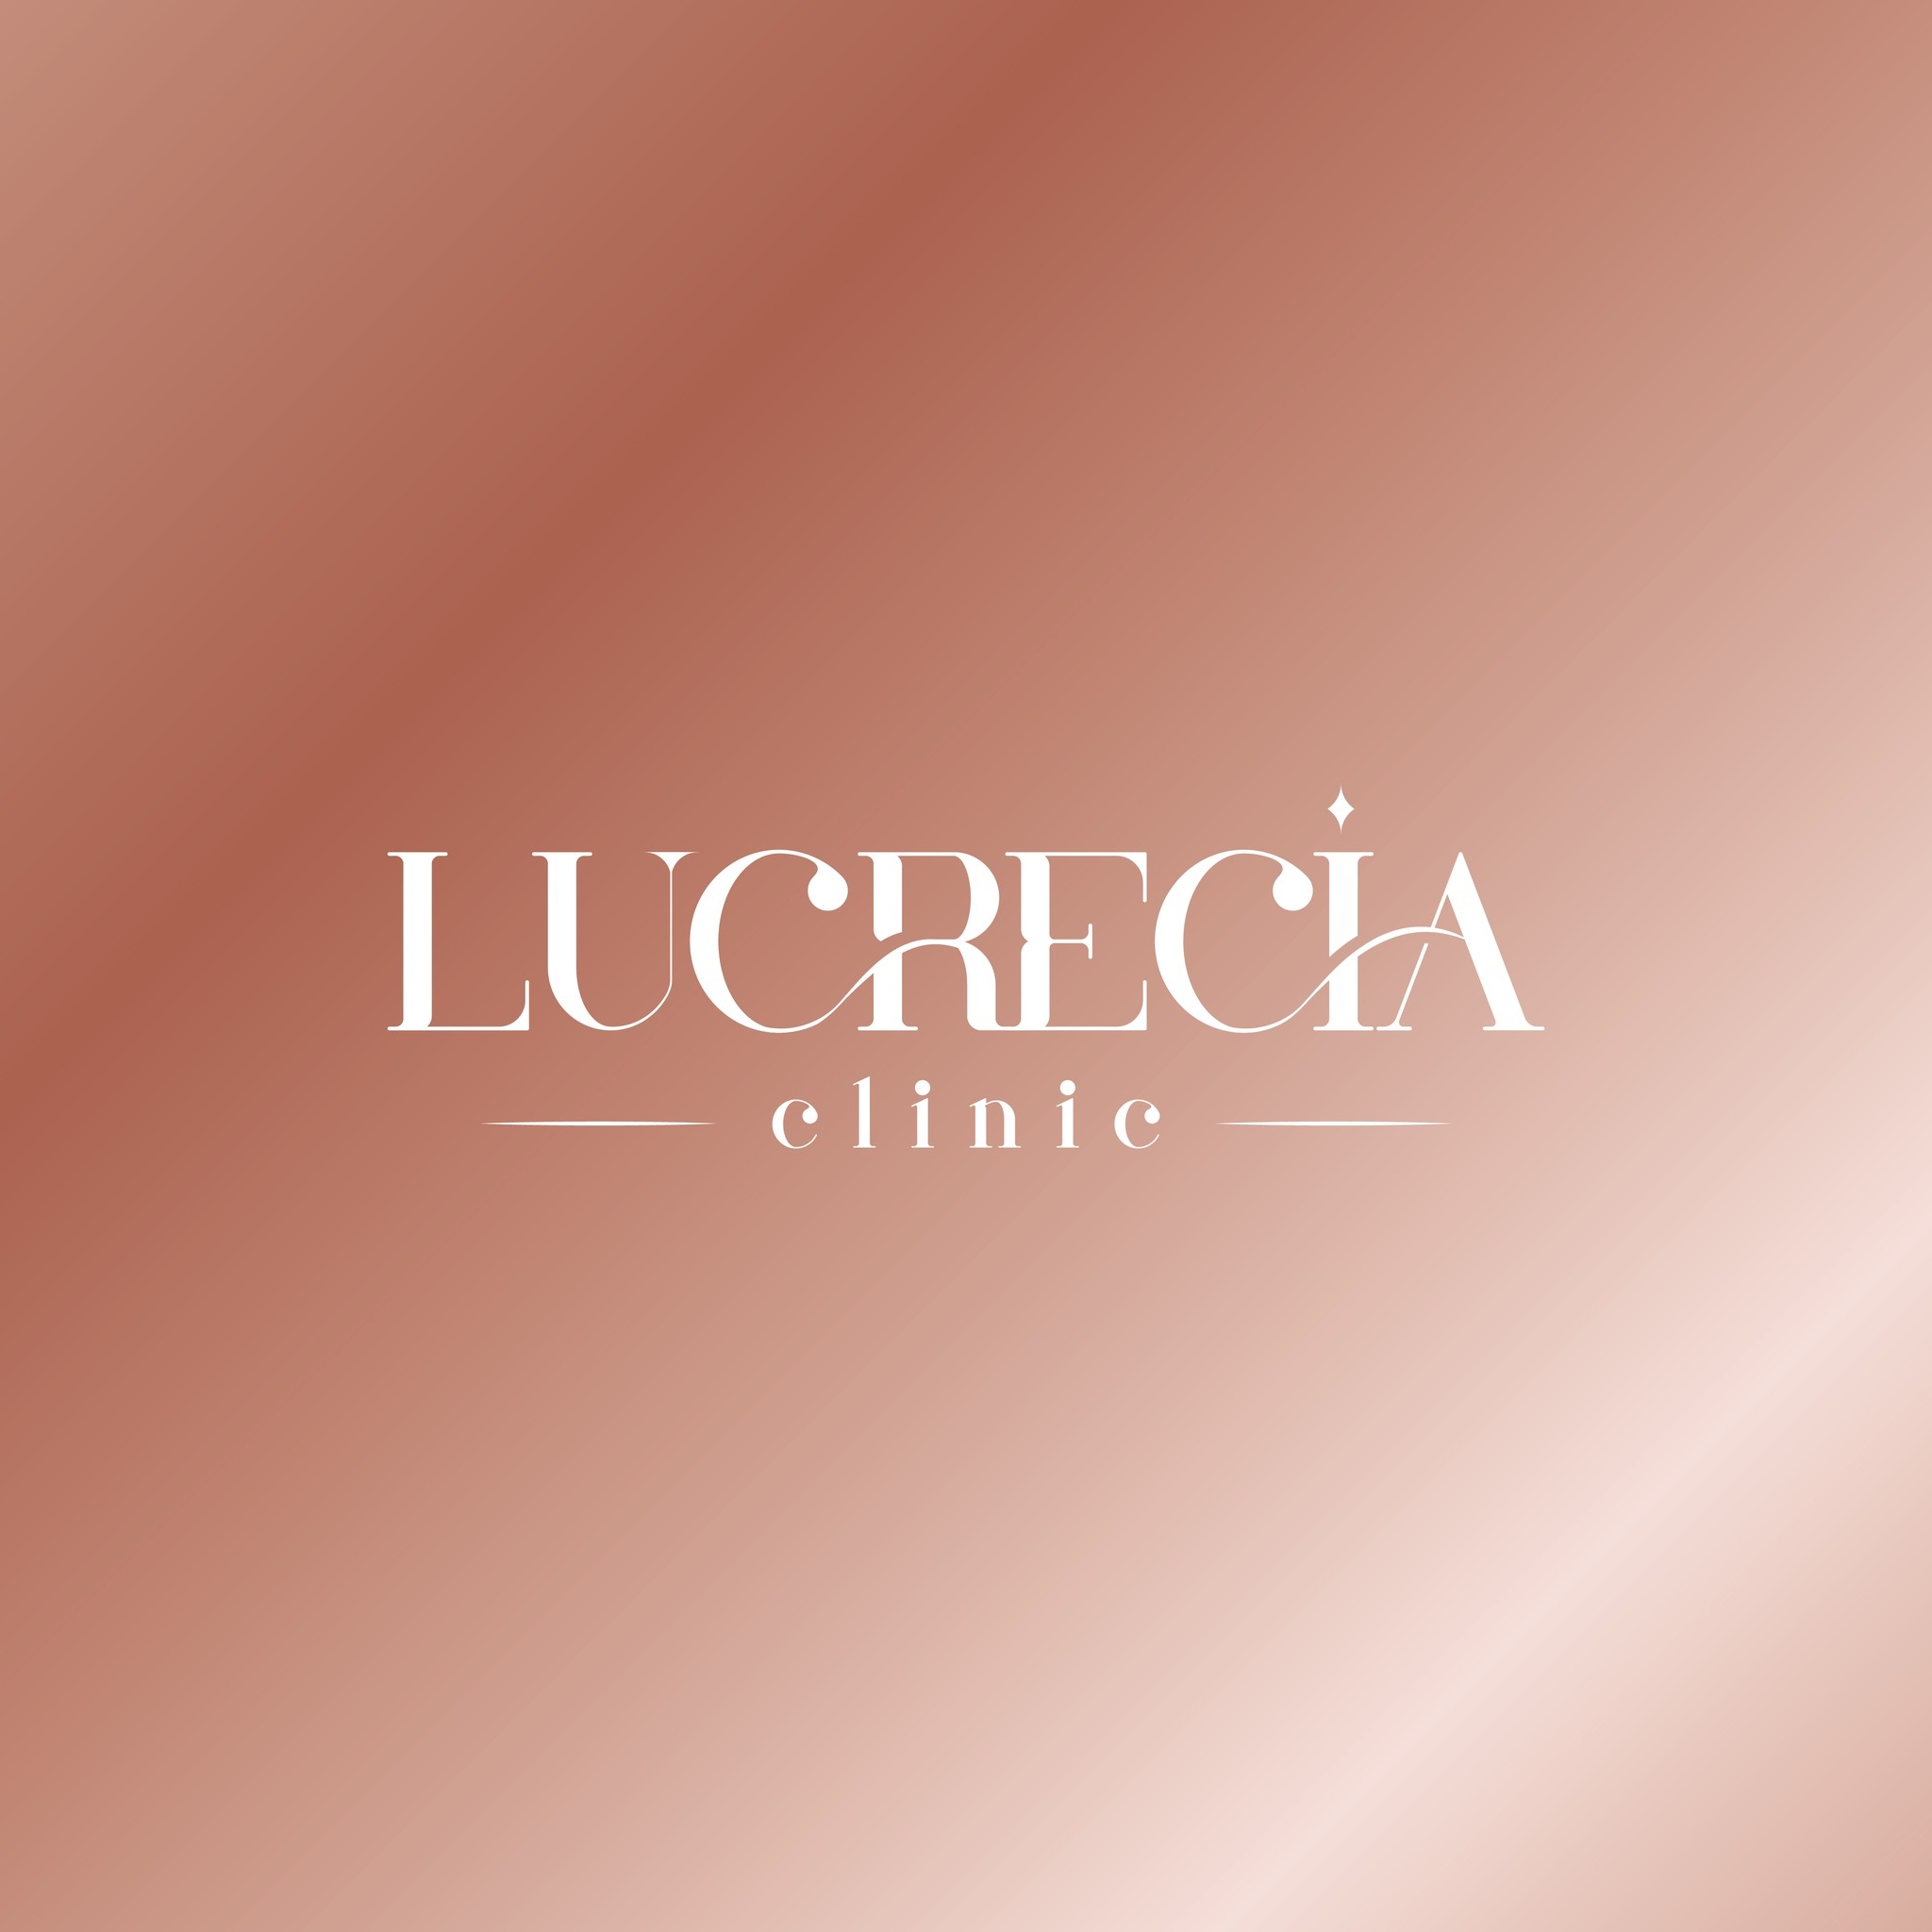 Lucrecia Clinic